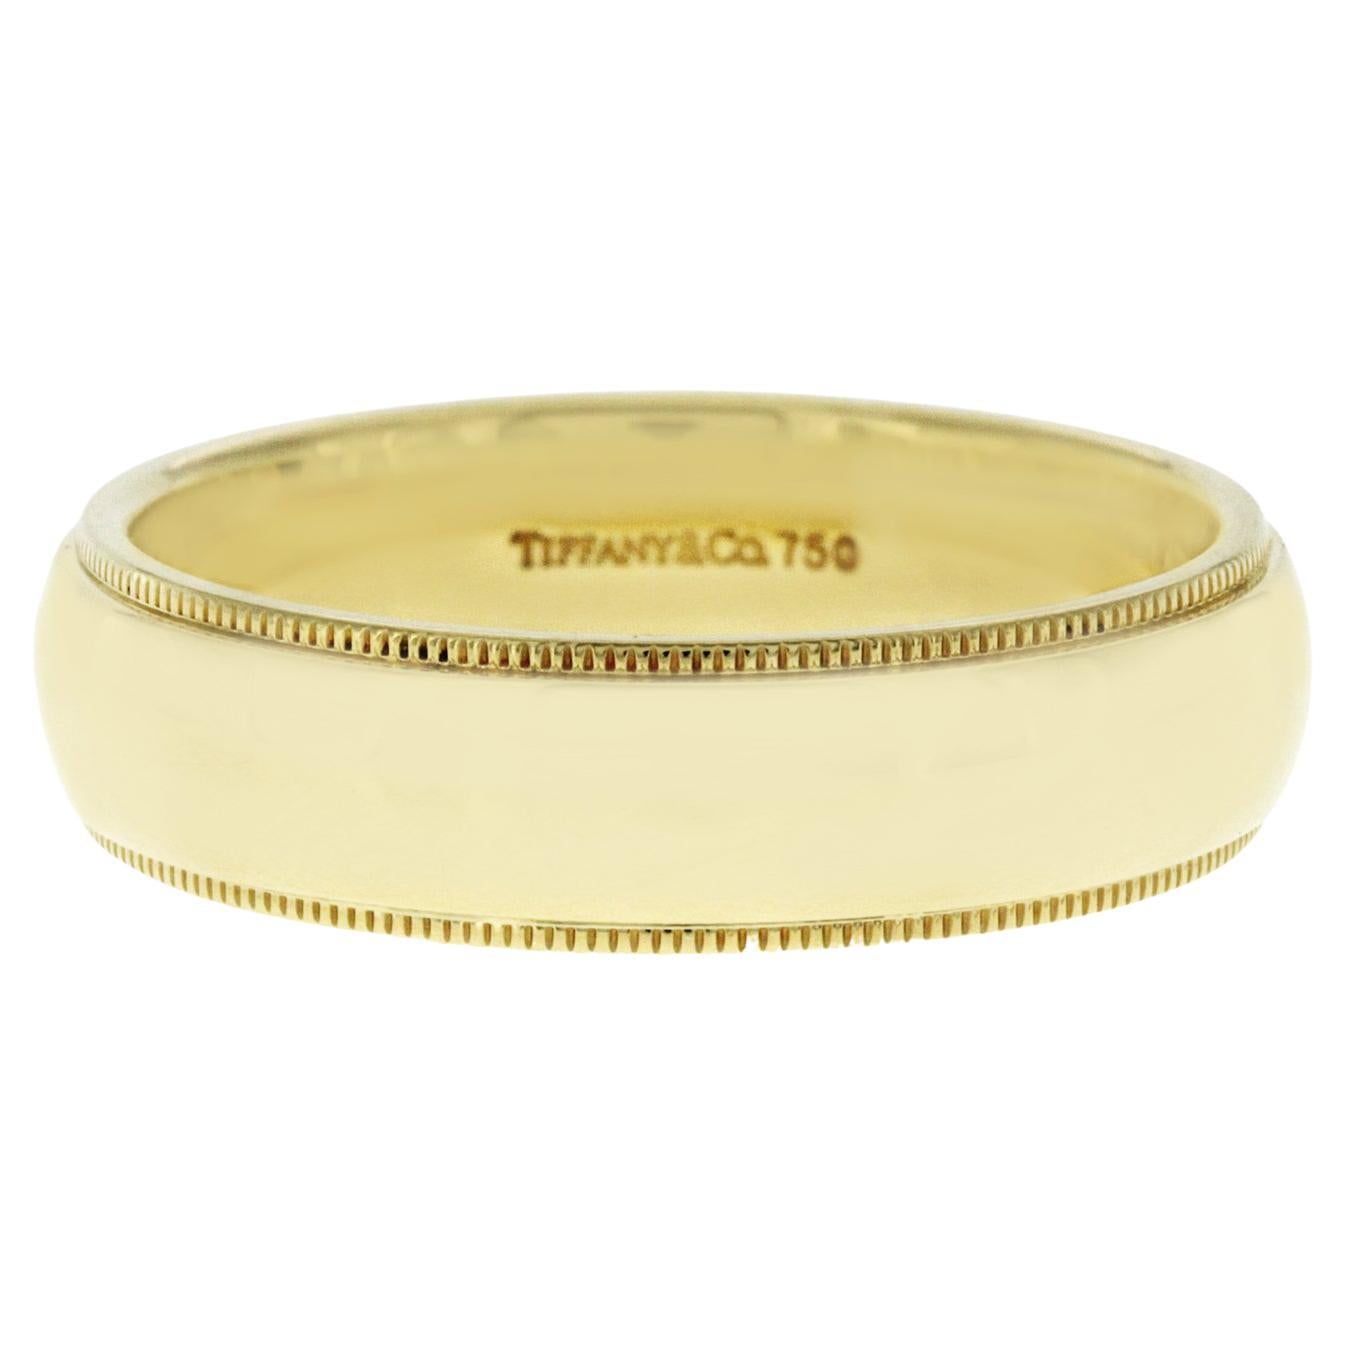 Tiffany & Co. 18K Yellow Gold Milgrain Wedding Band Ring